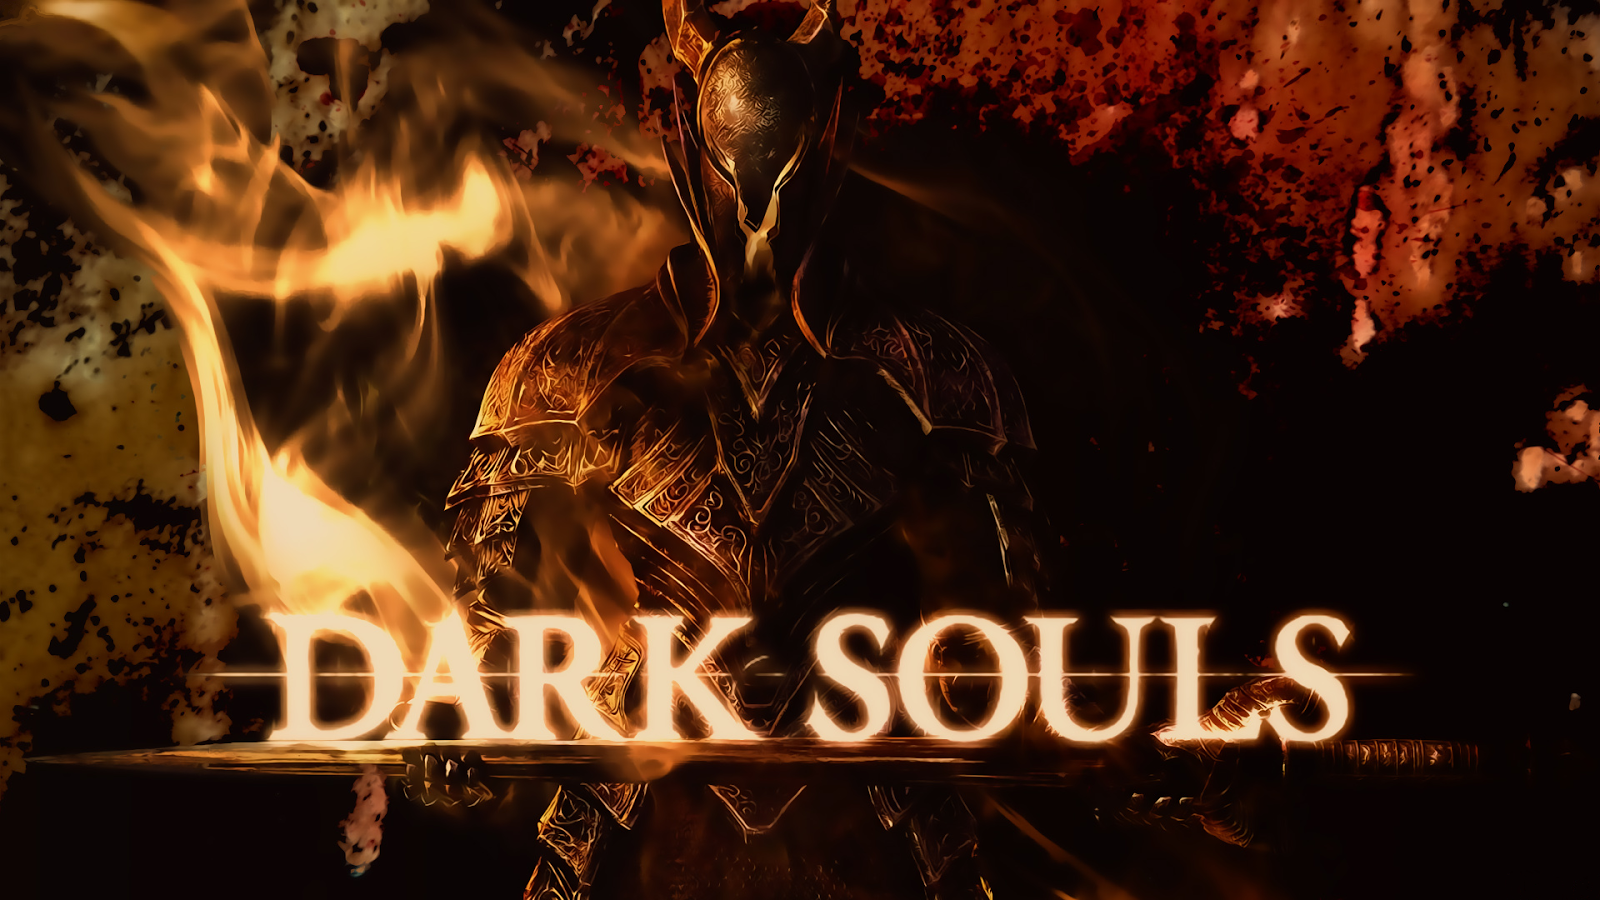 Amazoncom: Dark Souls Prepare-to-die edition PC-DVD